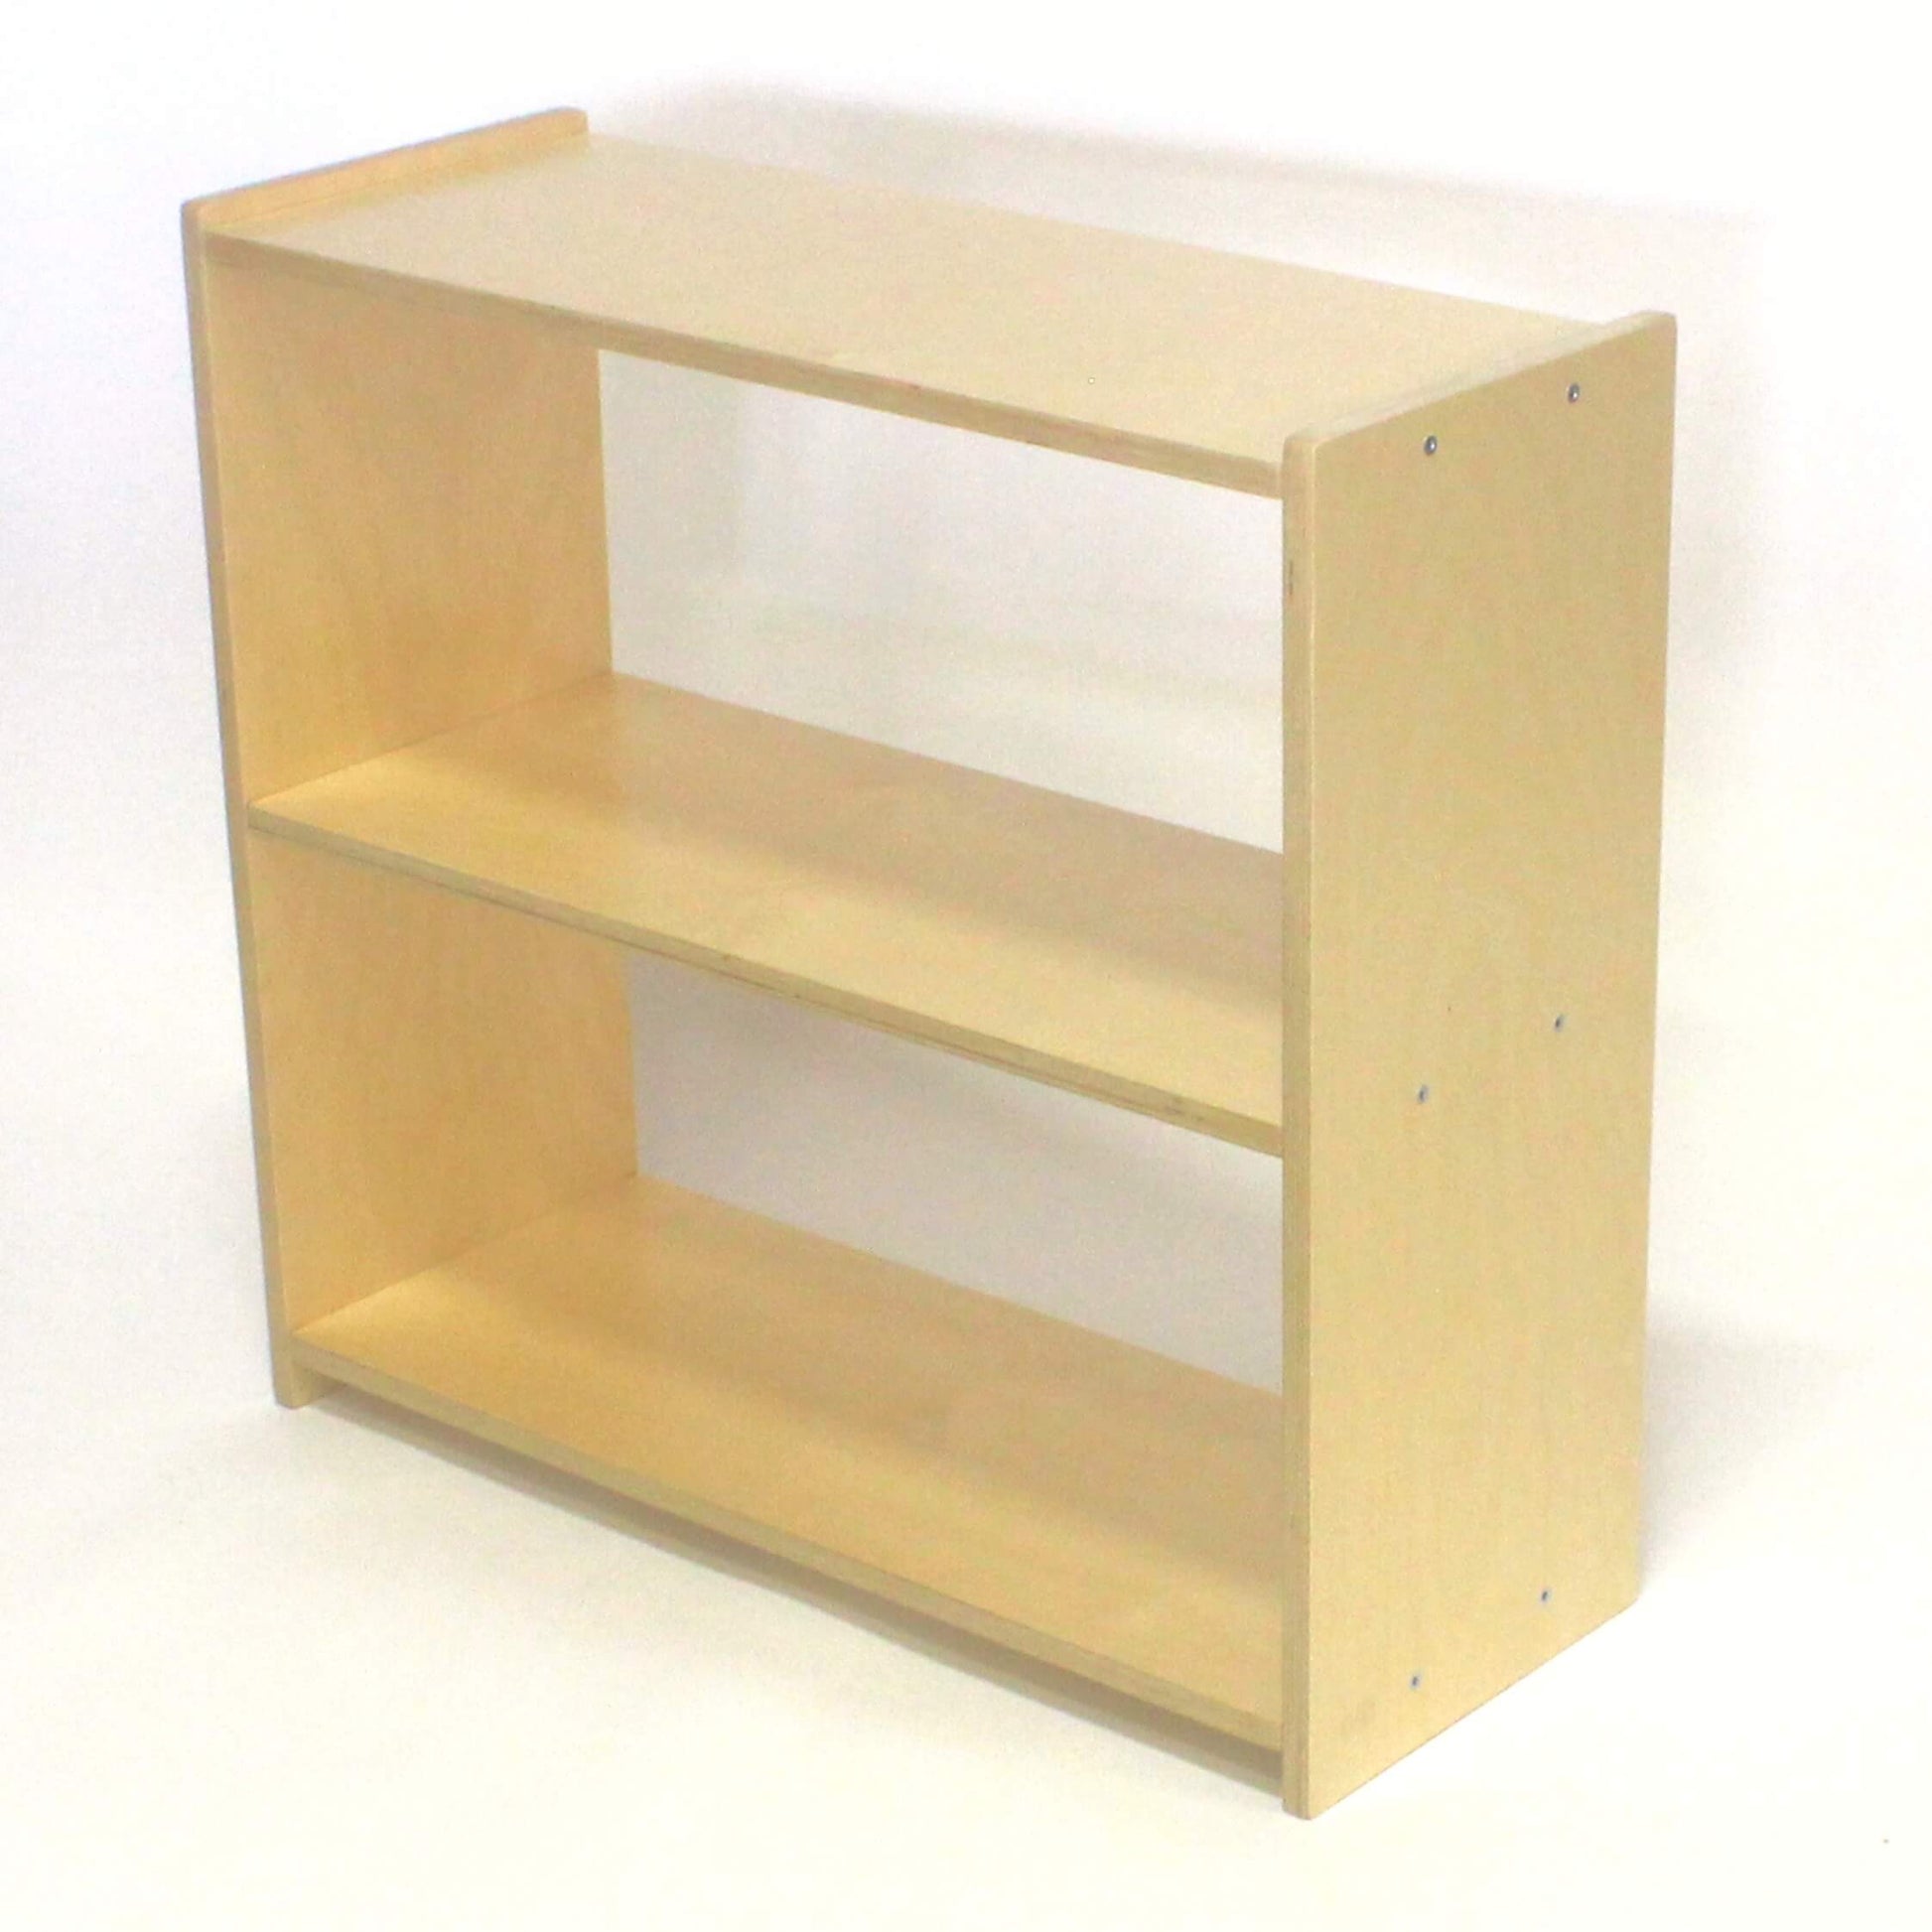 Tall wooden formaldehyde free montessori shelves for children